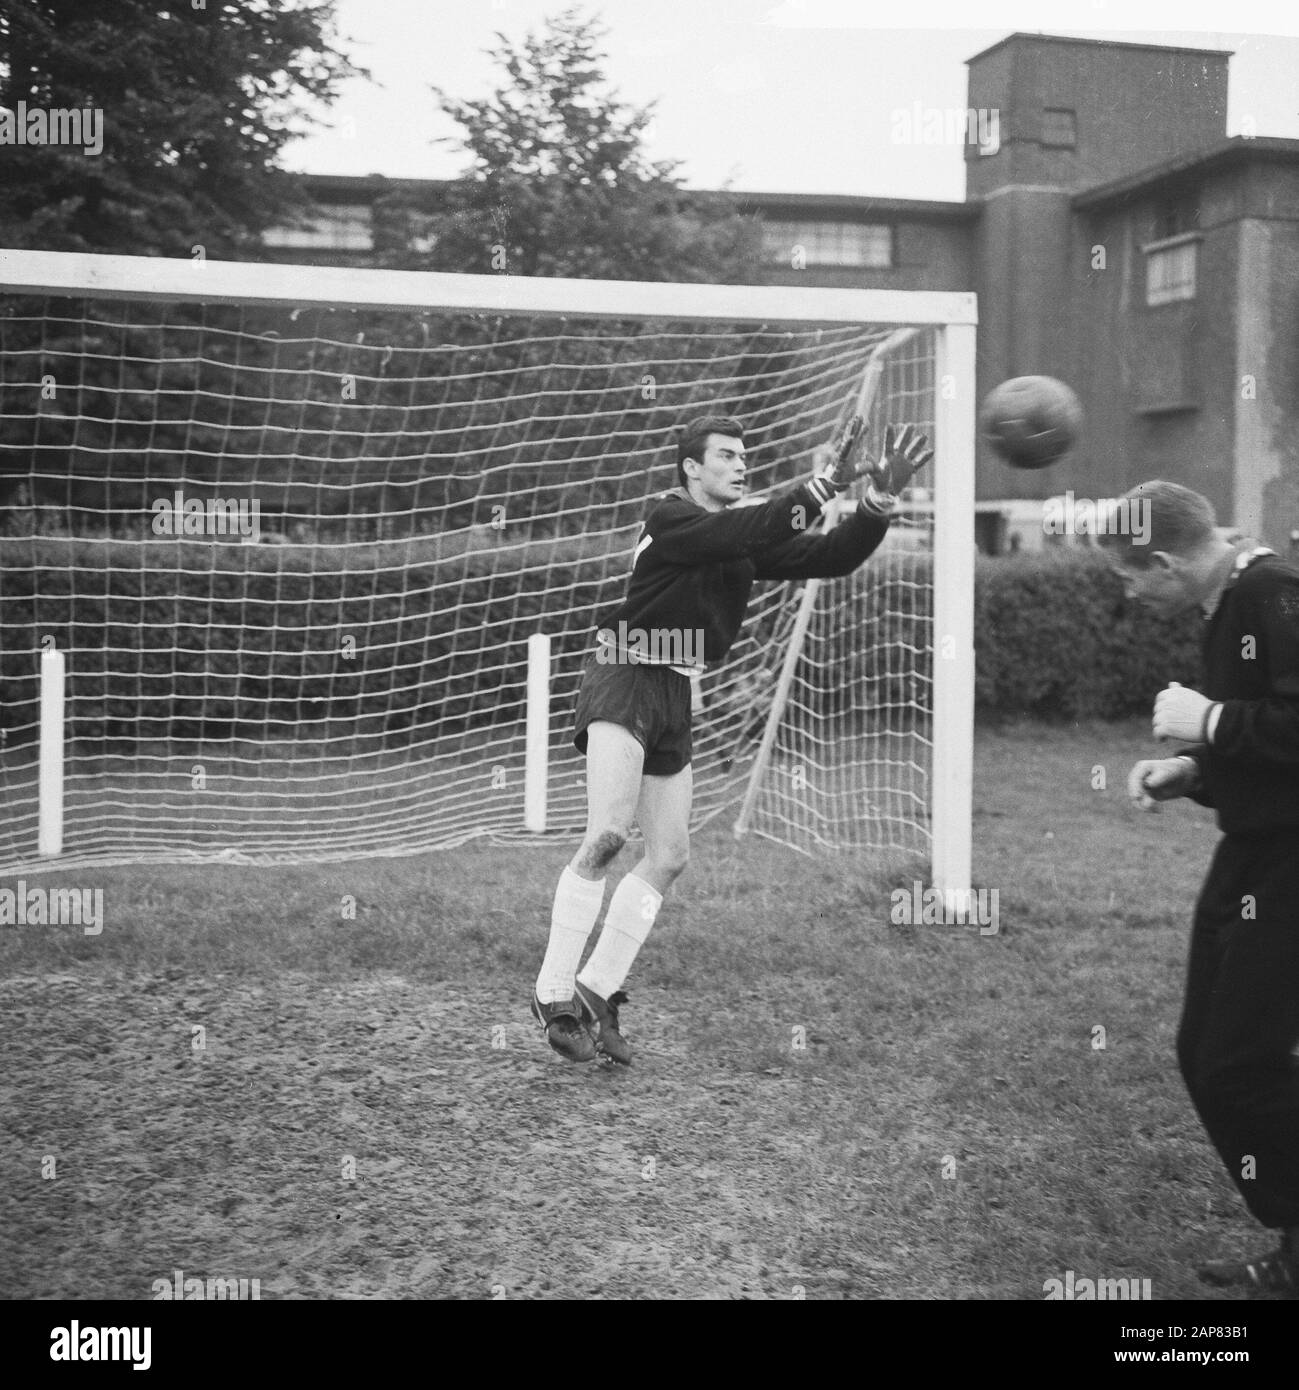 Ajax vs PSV 2-0, goalkeeper Strich in action Date: September 5, 1965 Keywords: goalkeepers, sport, football Stock Photo